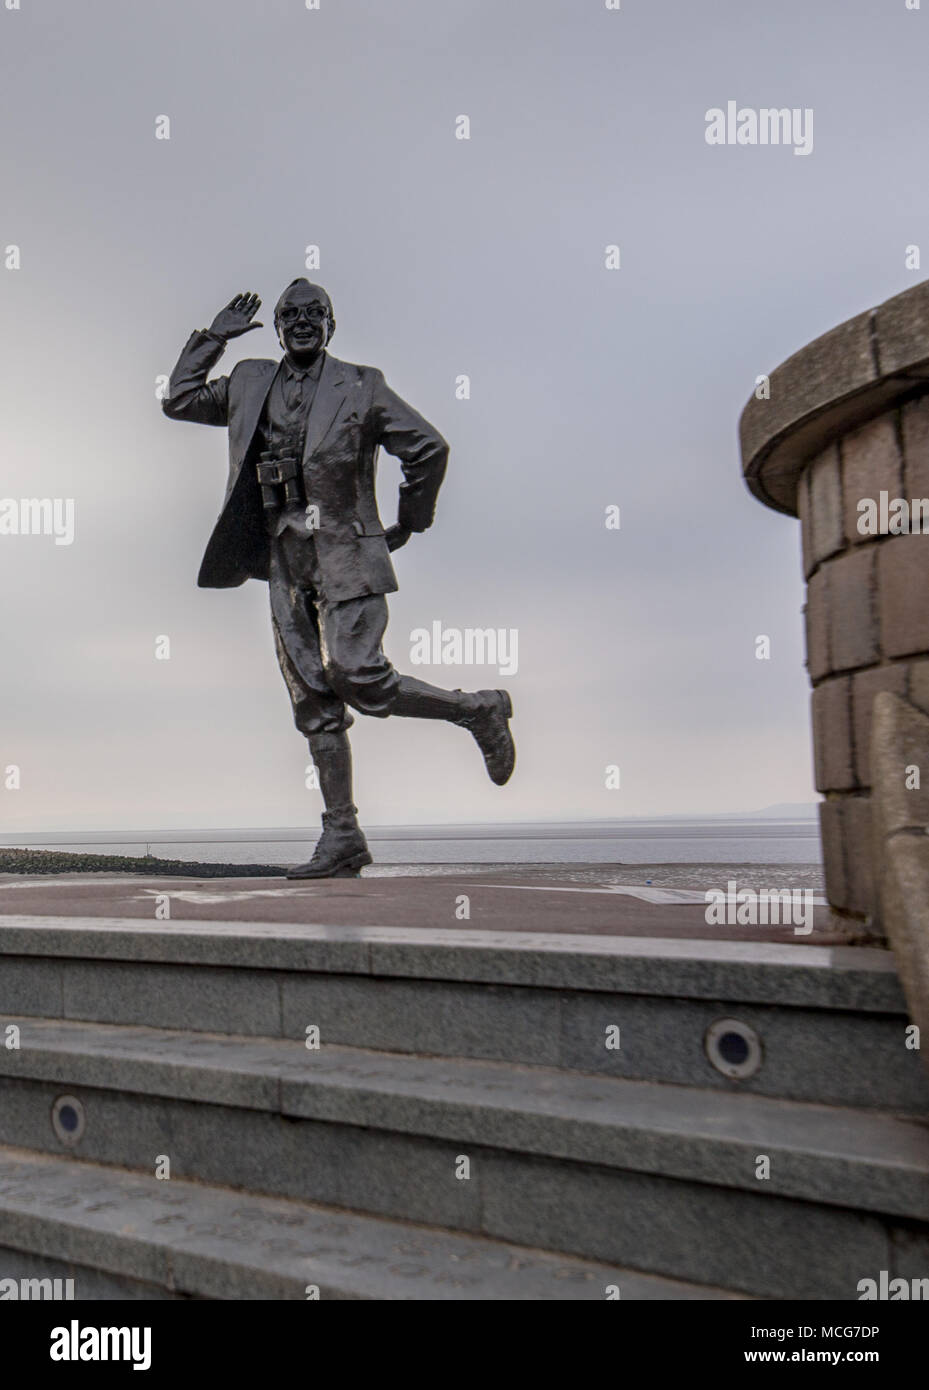 Statue of Eric Morecambe on Morecambe promenade.  Taken at Morecambe, England, UK on 11 April 2018. Stock Photo